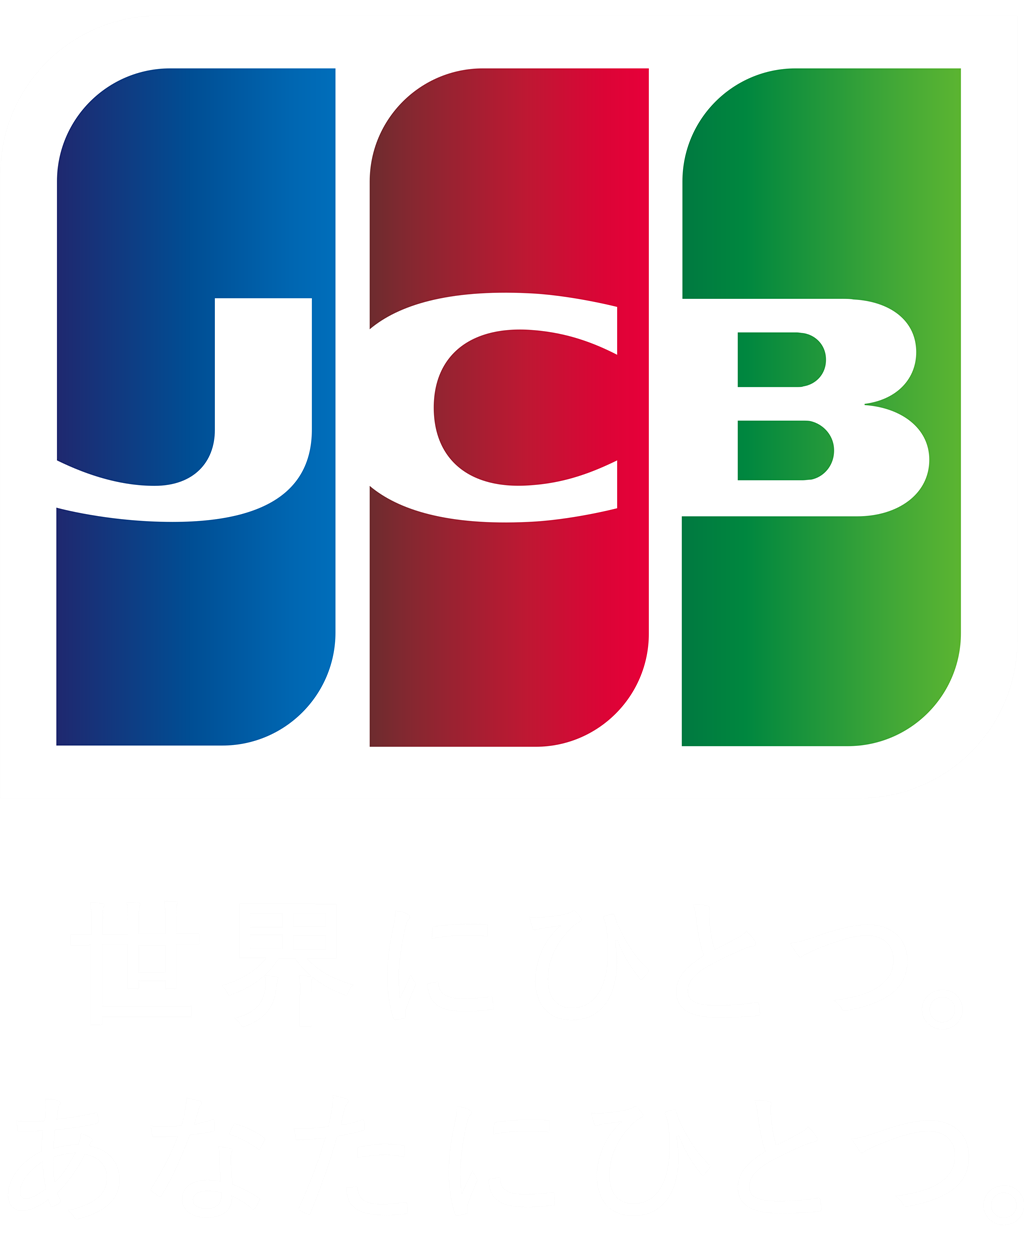 Jcb Emblem logotype, transparent .png, medium, large